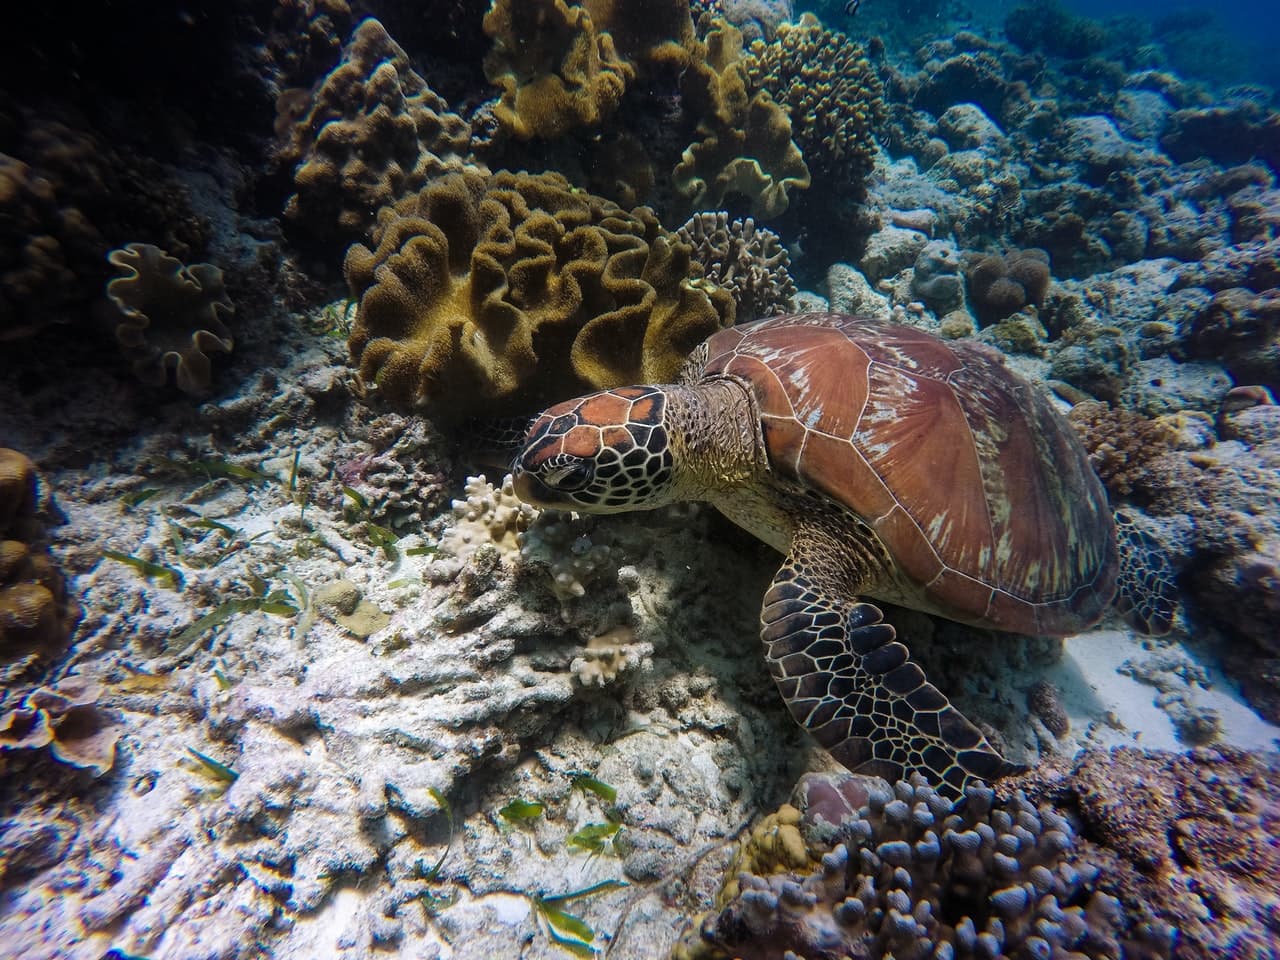 aprende ingles partes animales tortuga marina arrecife